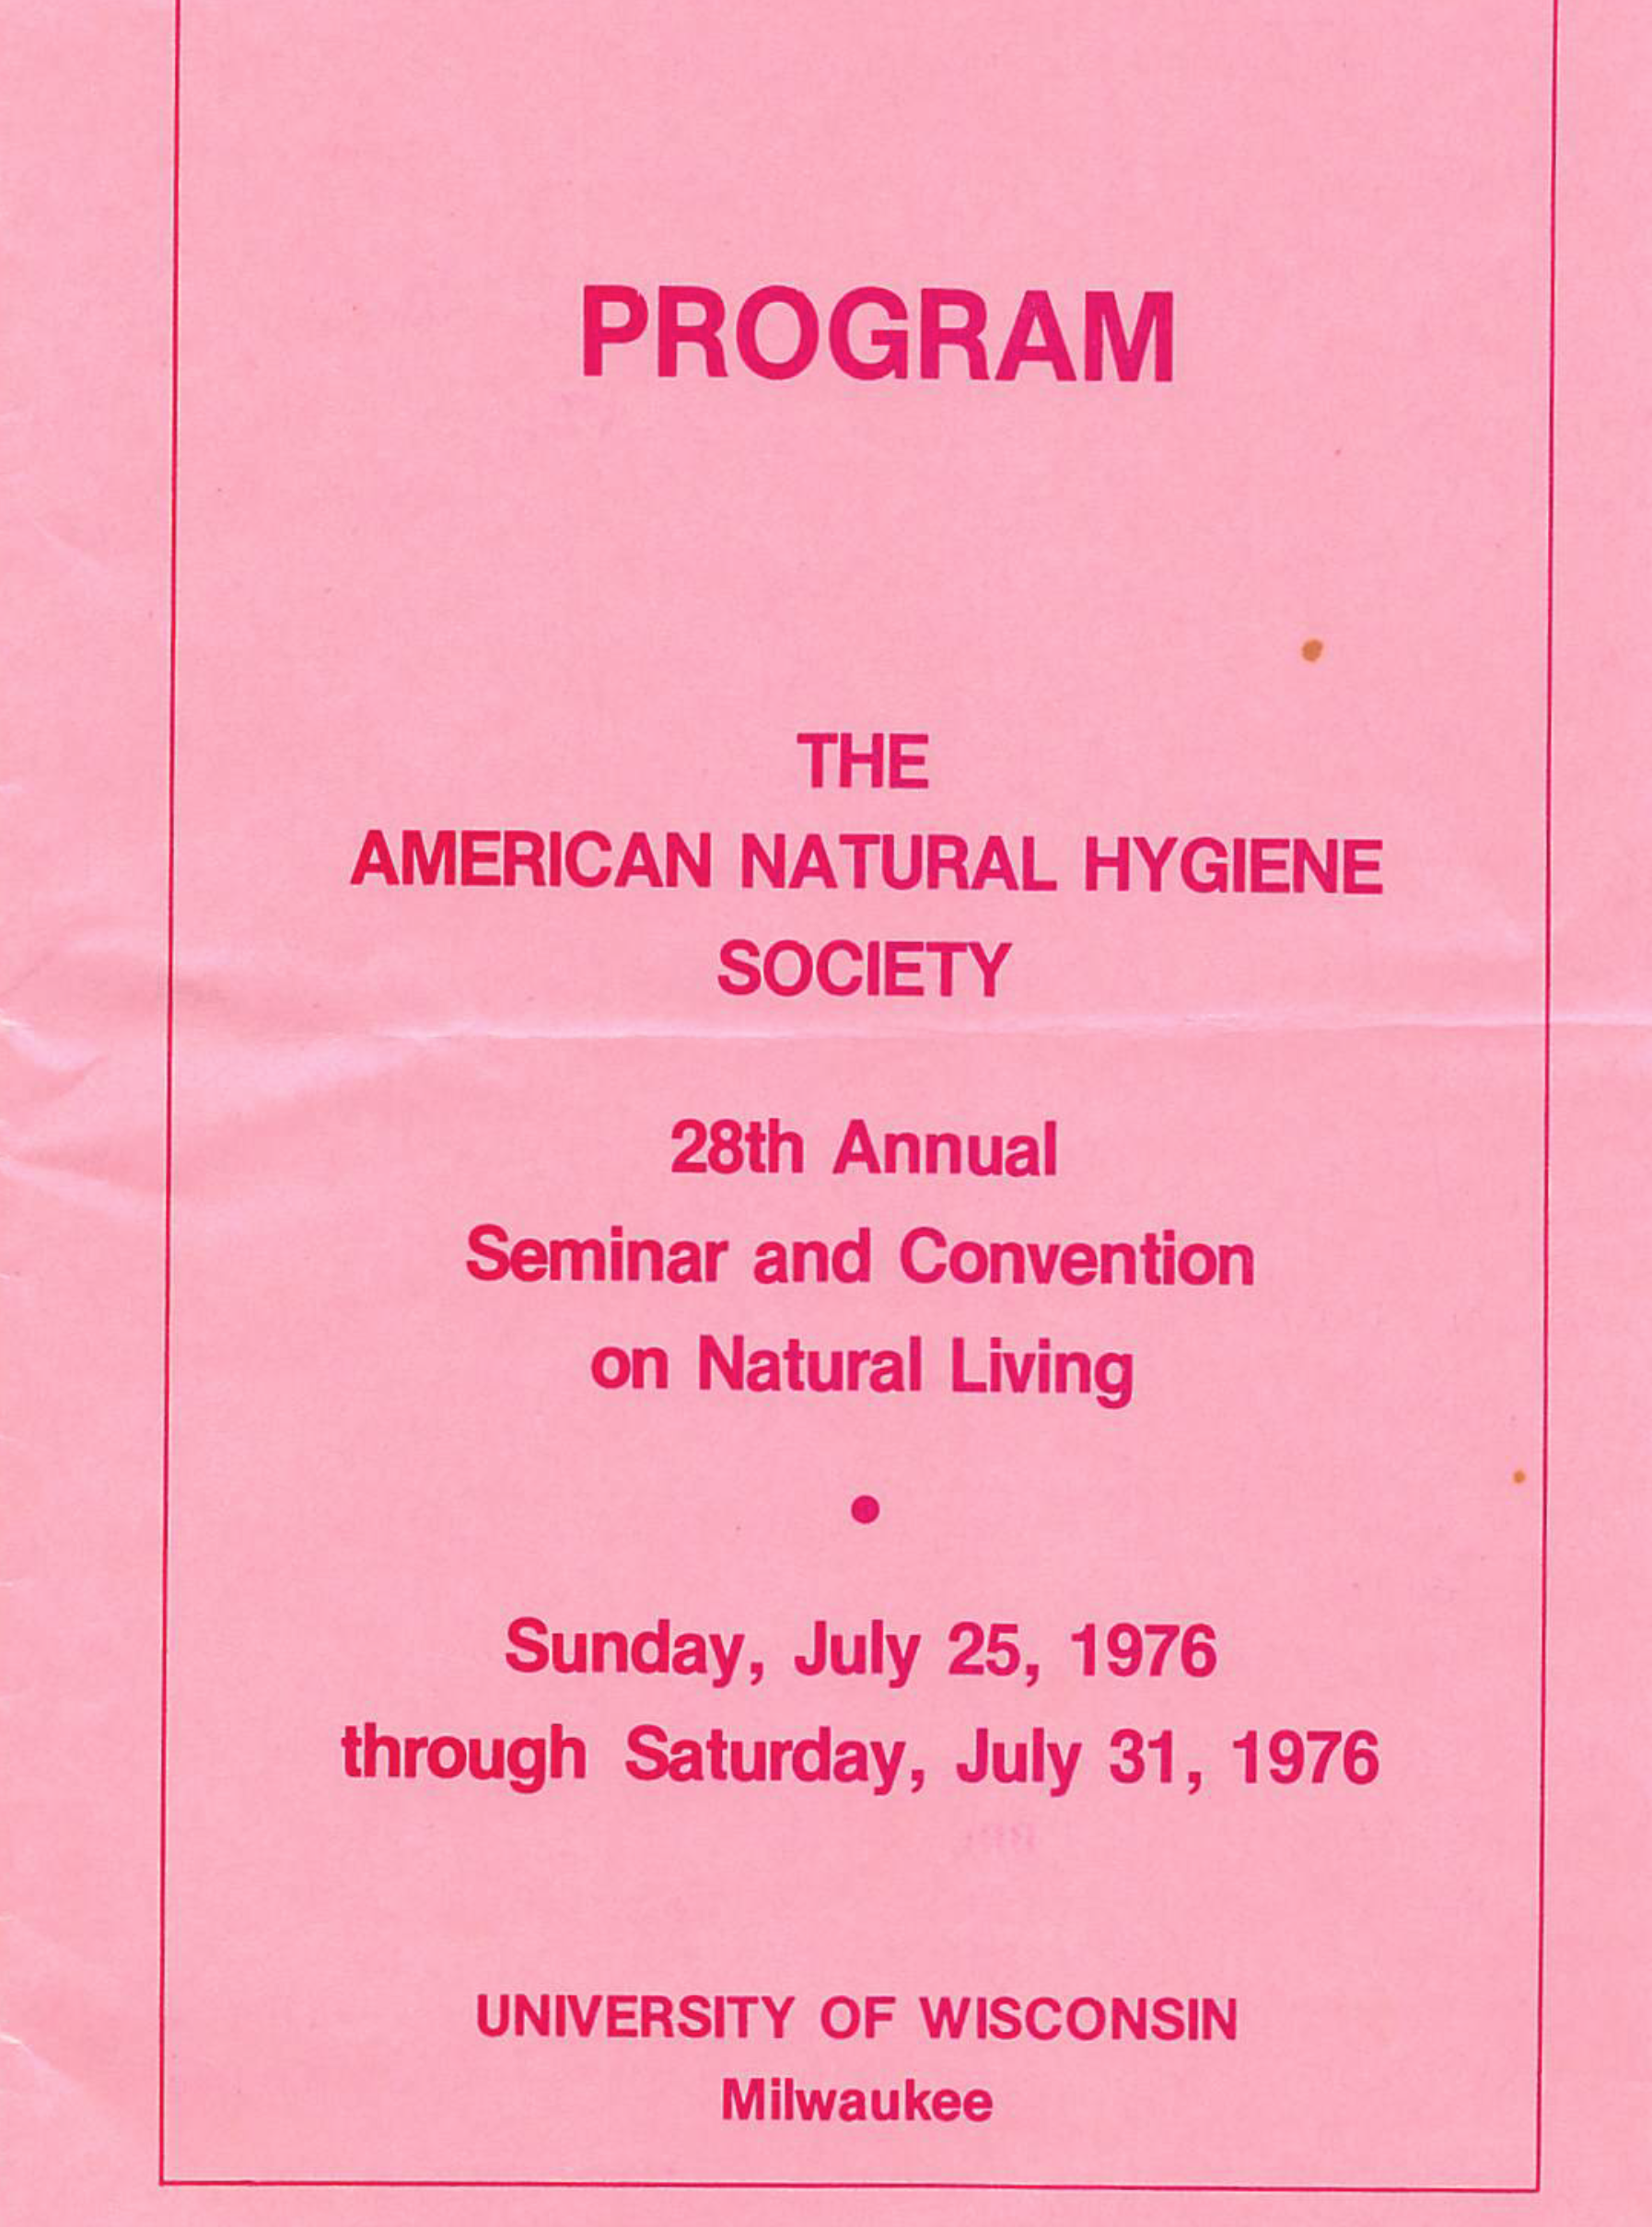 Conference Program. Milwaukee, 1976